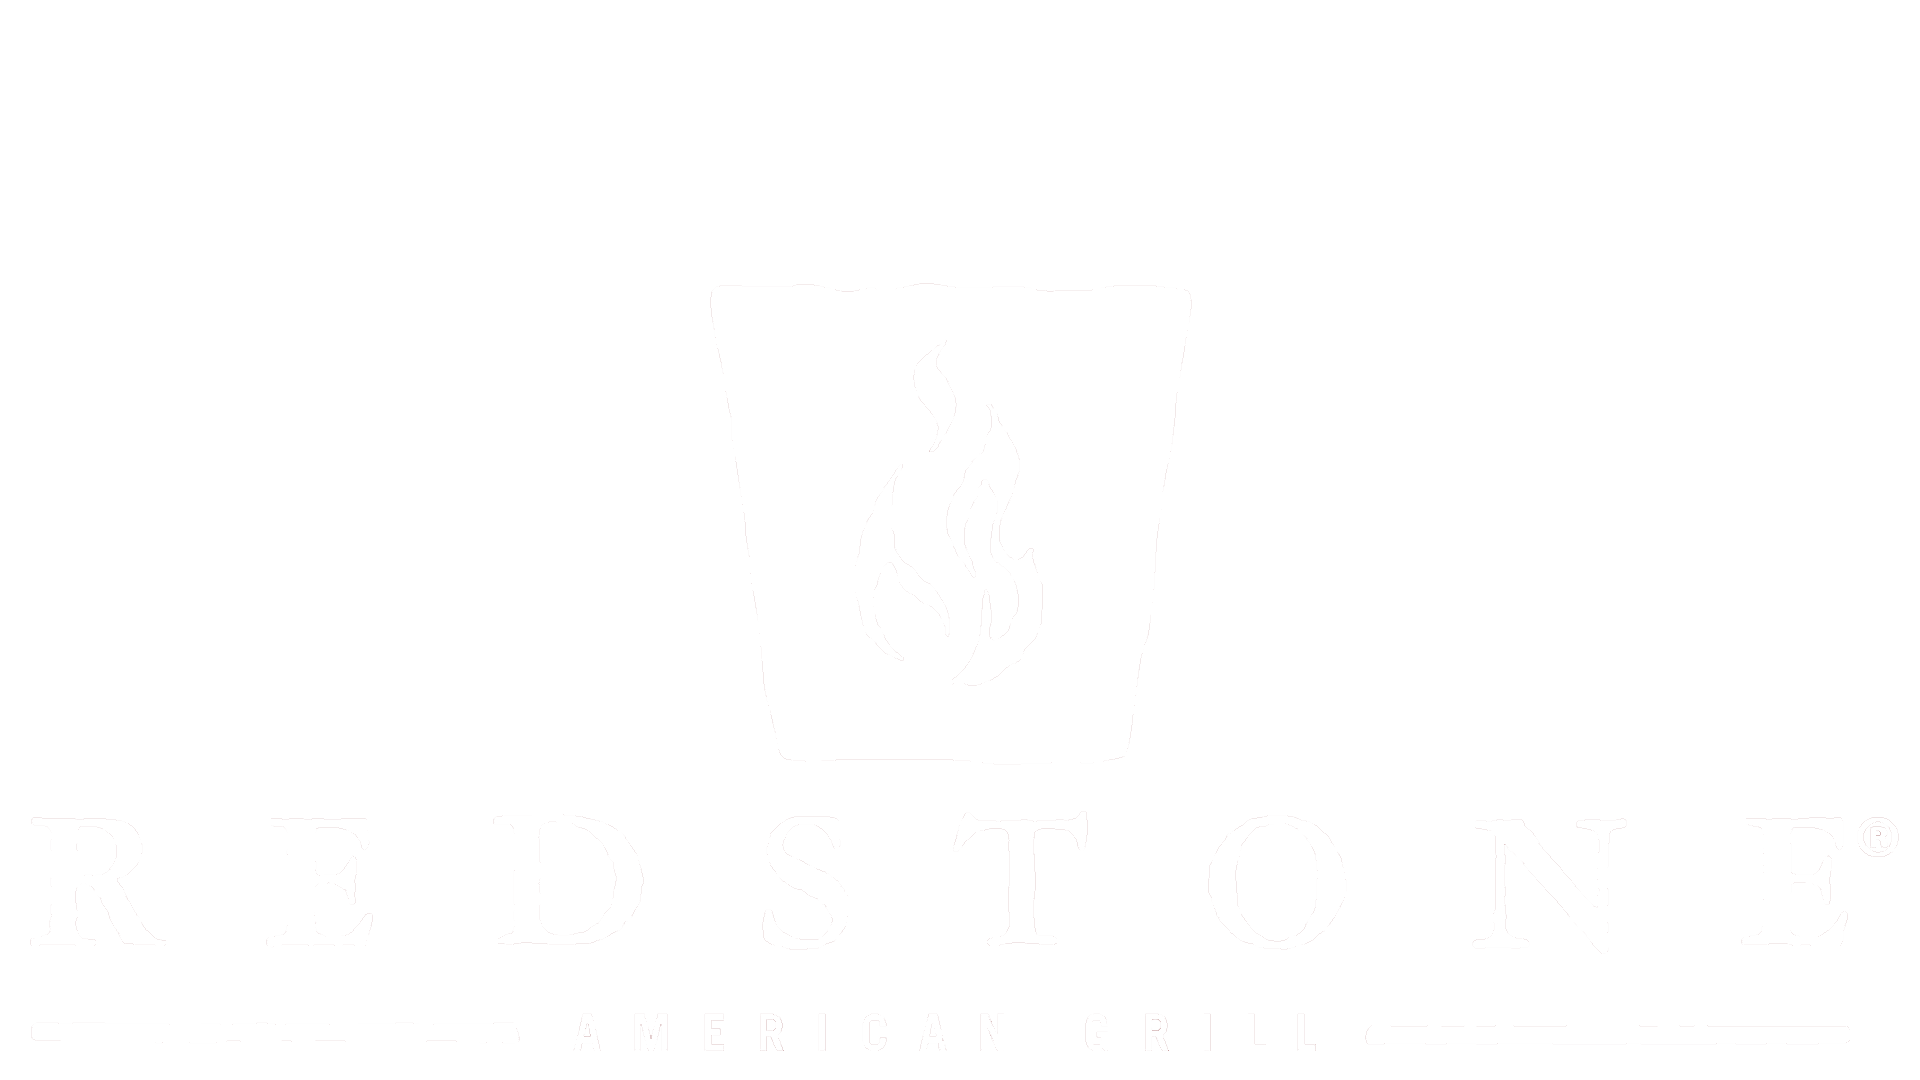 Redstone American Grill